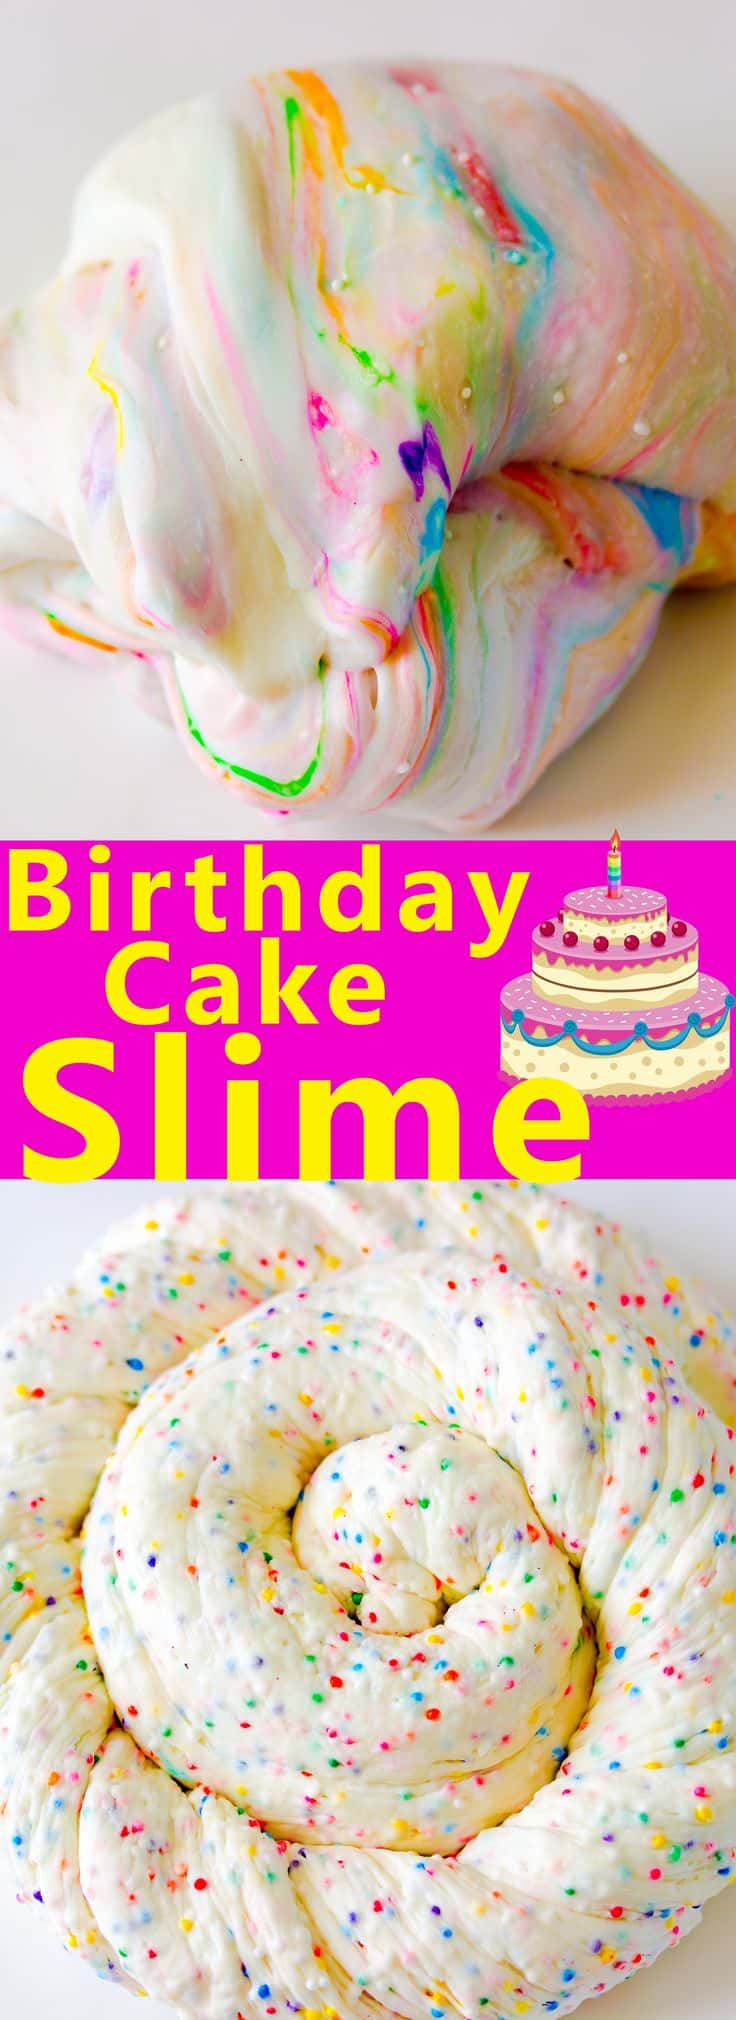 Birthday cake slime